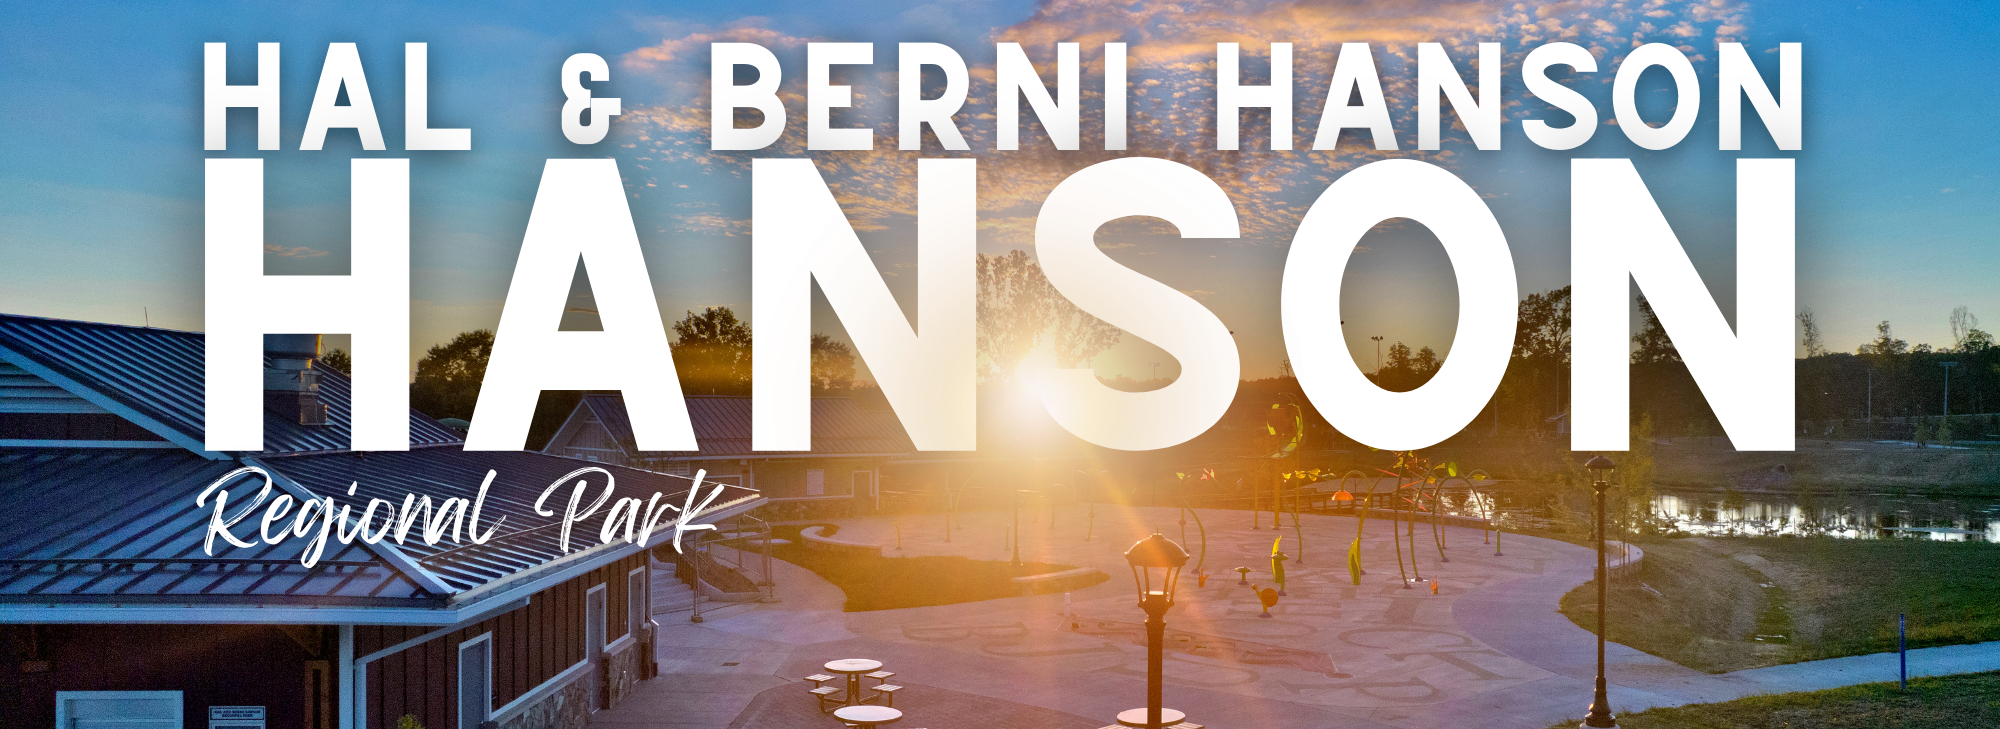 Hal and Berni Hanson Regional Park